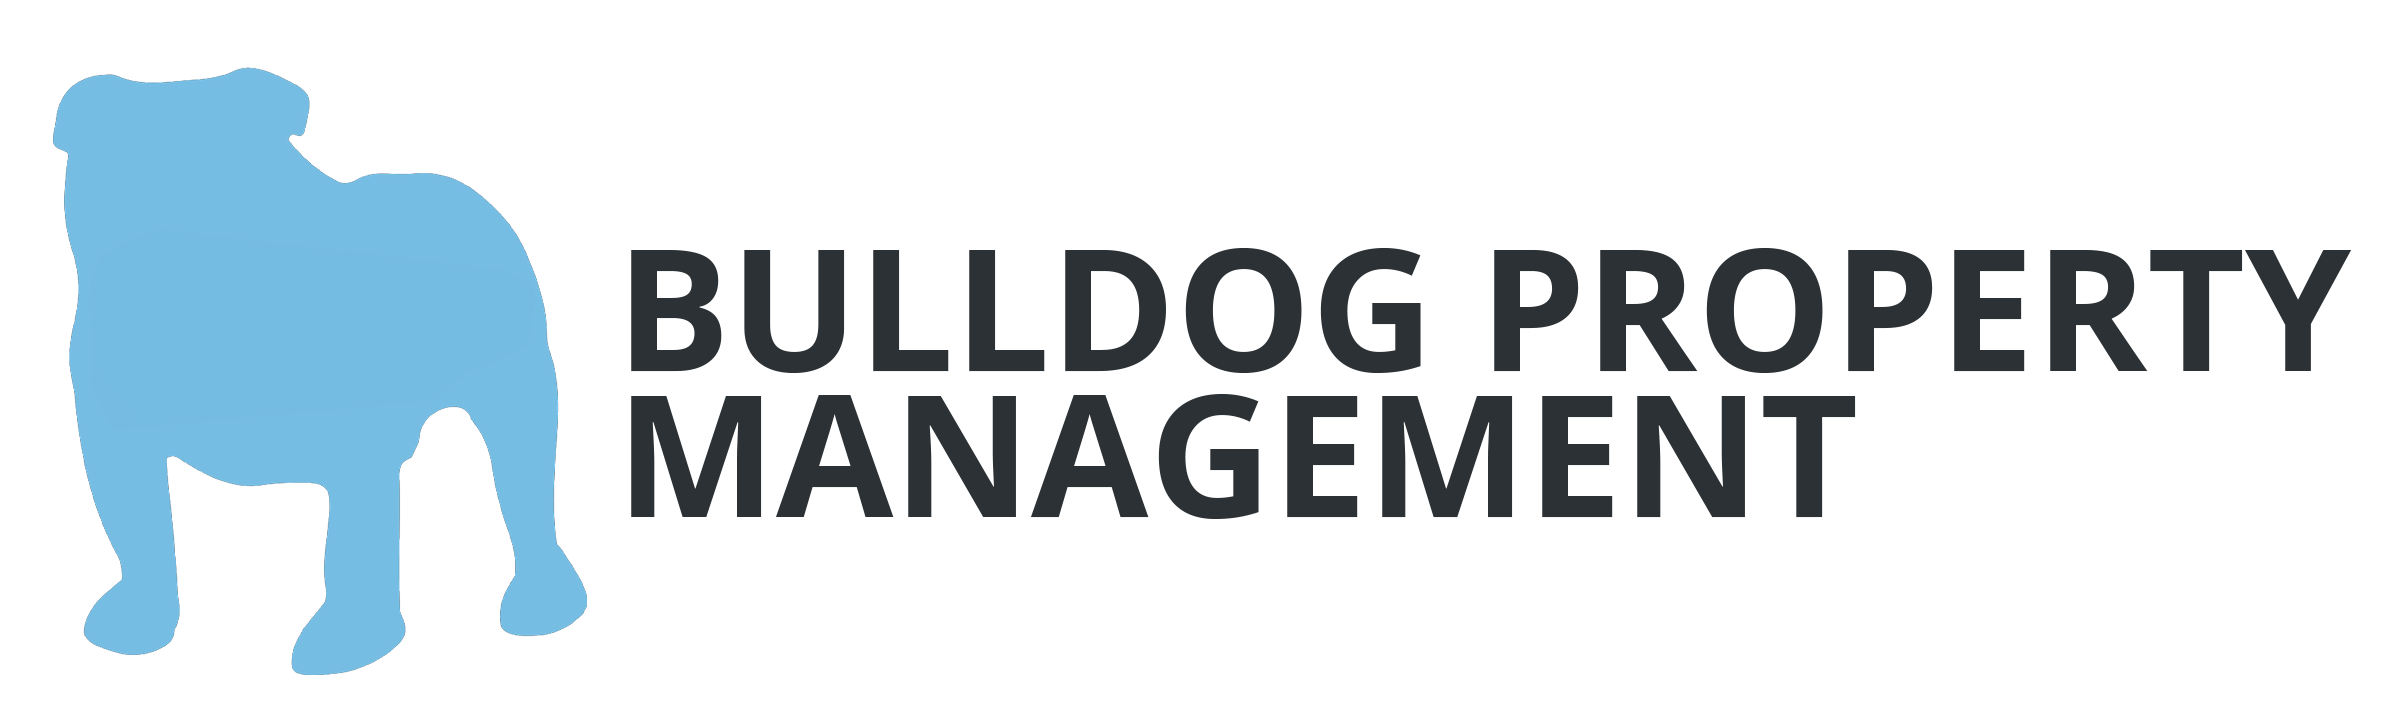 Bulldog Property Management